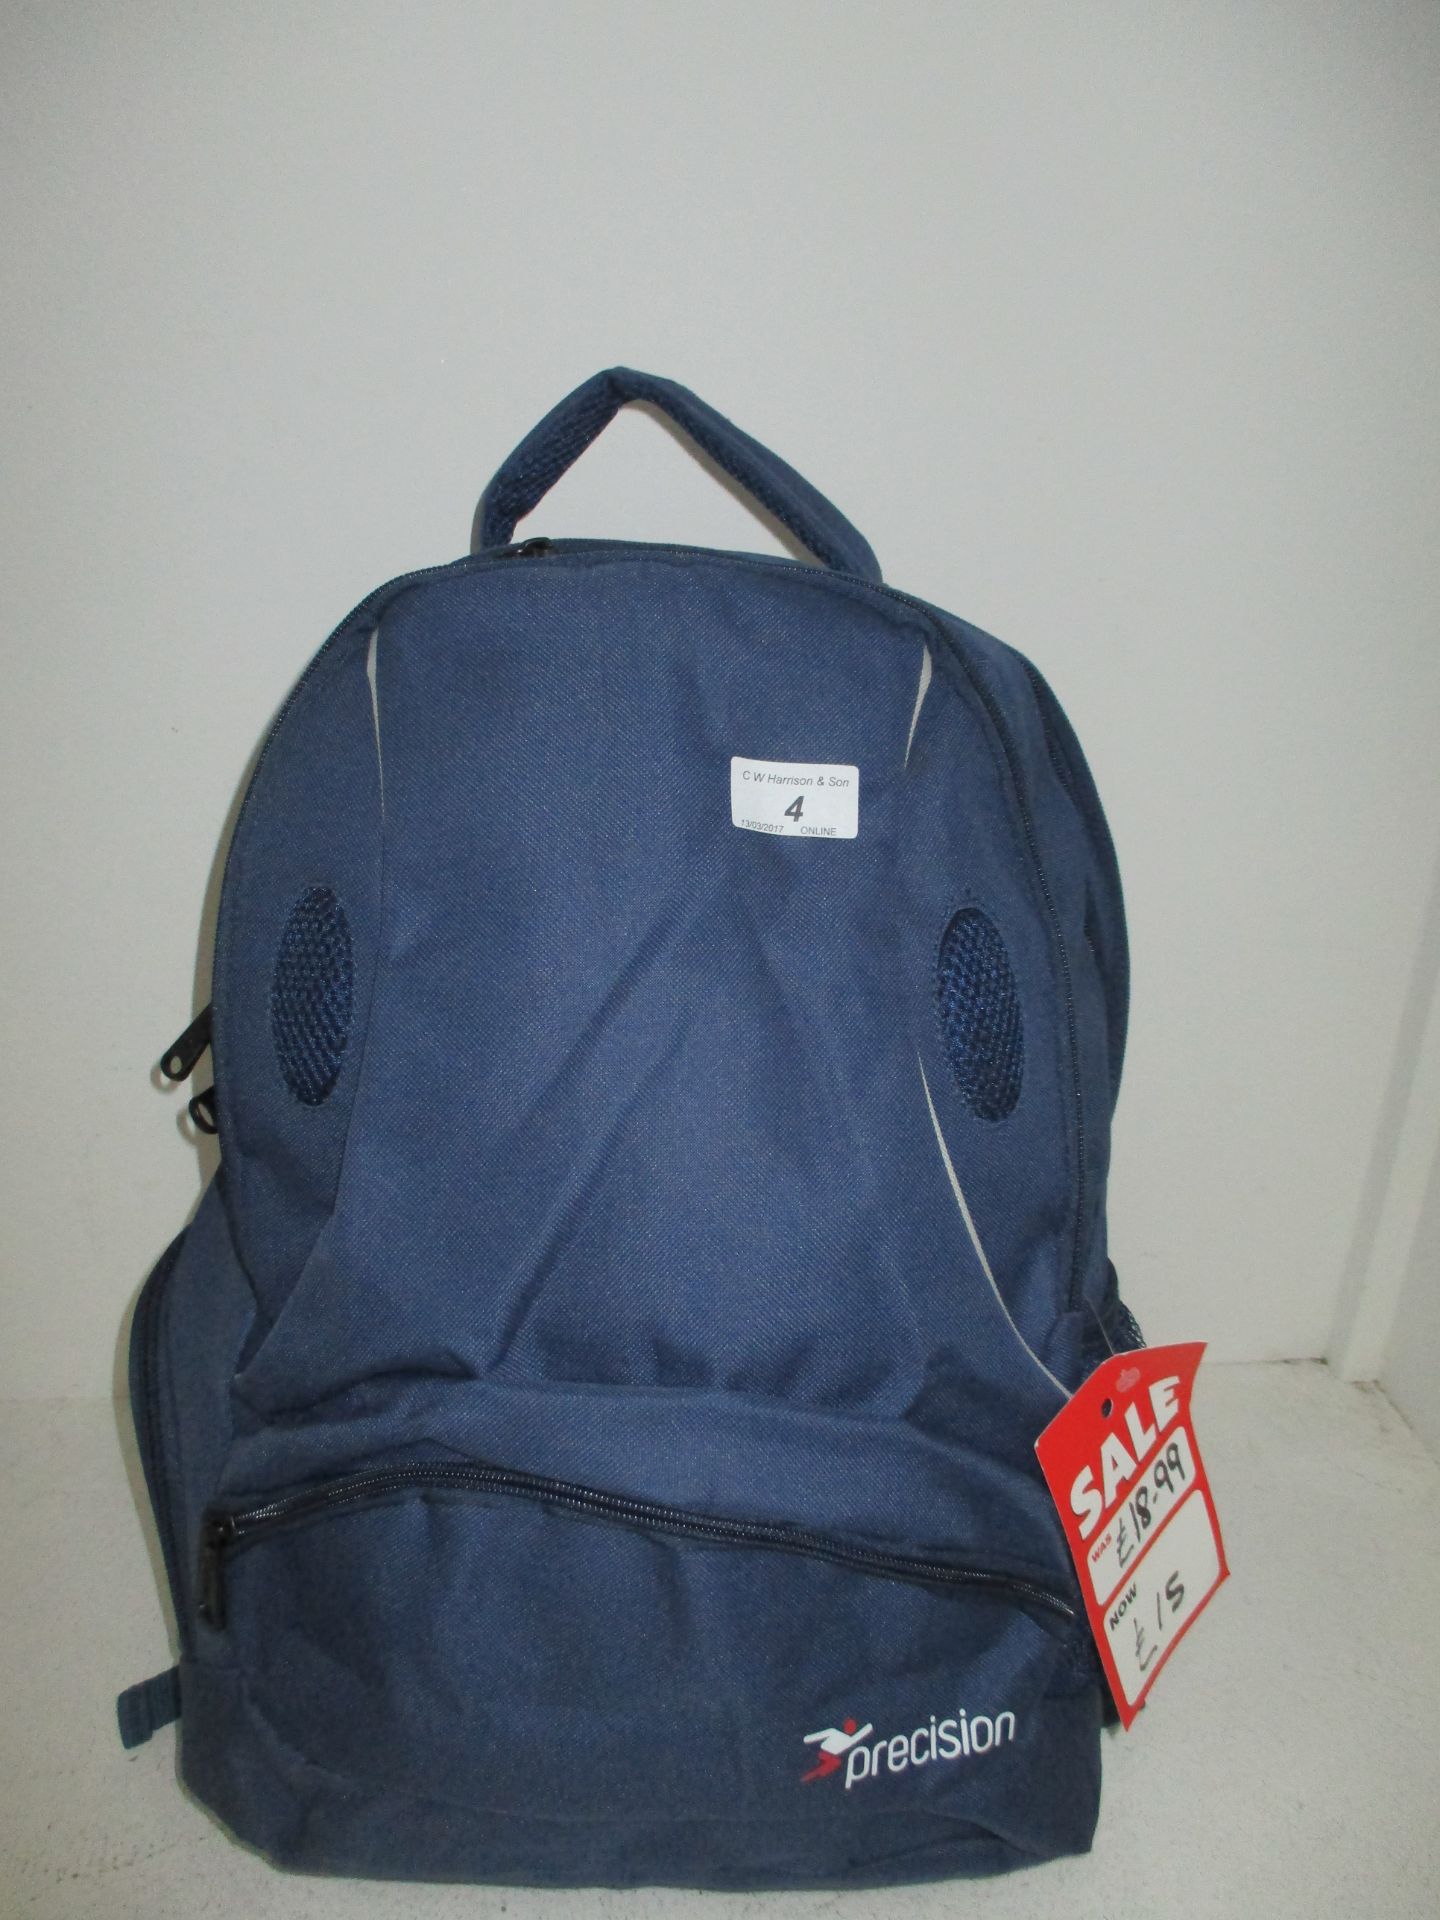 A Precision T21 blue back pack